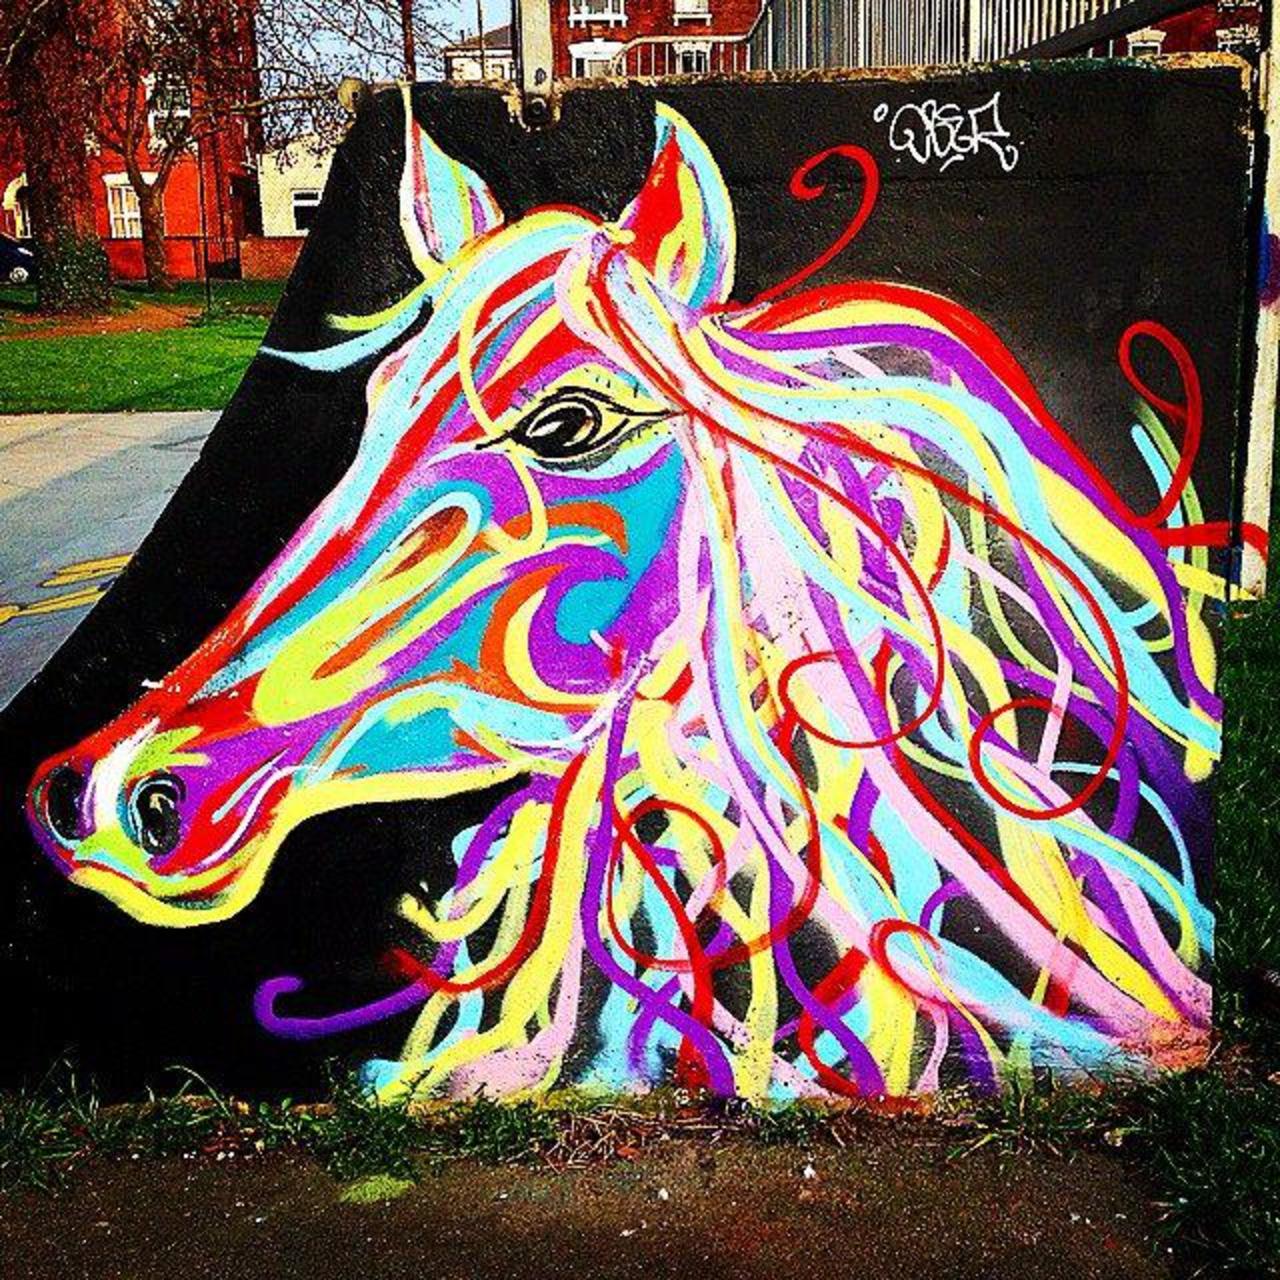 Found at #Glouceter city skatepark #streetart artist unknown #graffiti #photography #skatelife #horse @rtglos http://t.co/LOYXUBt8ZX